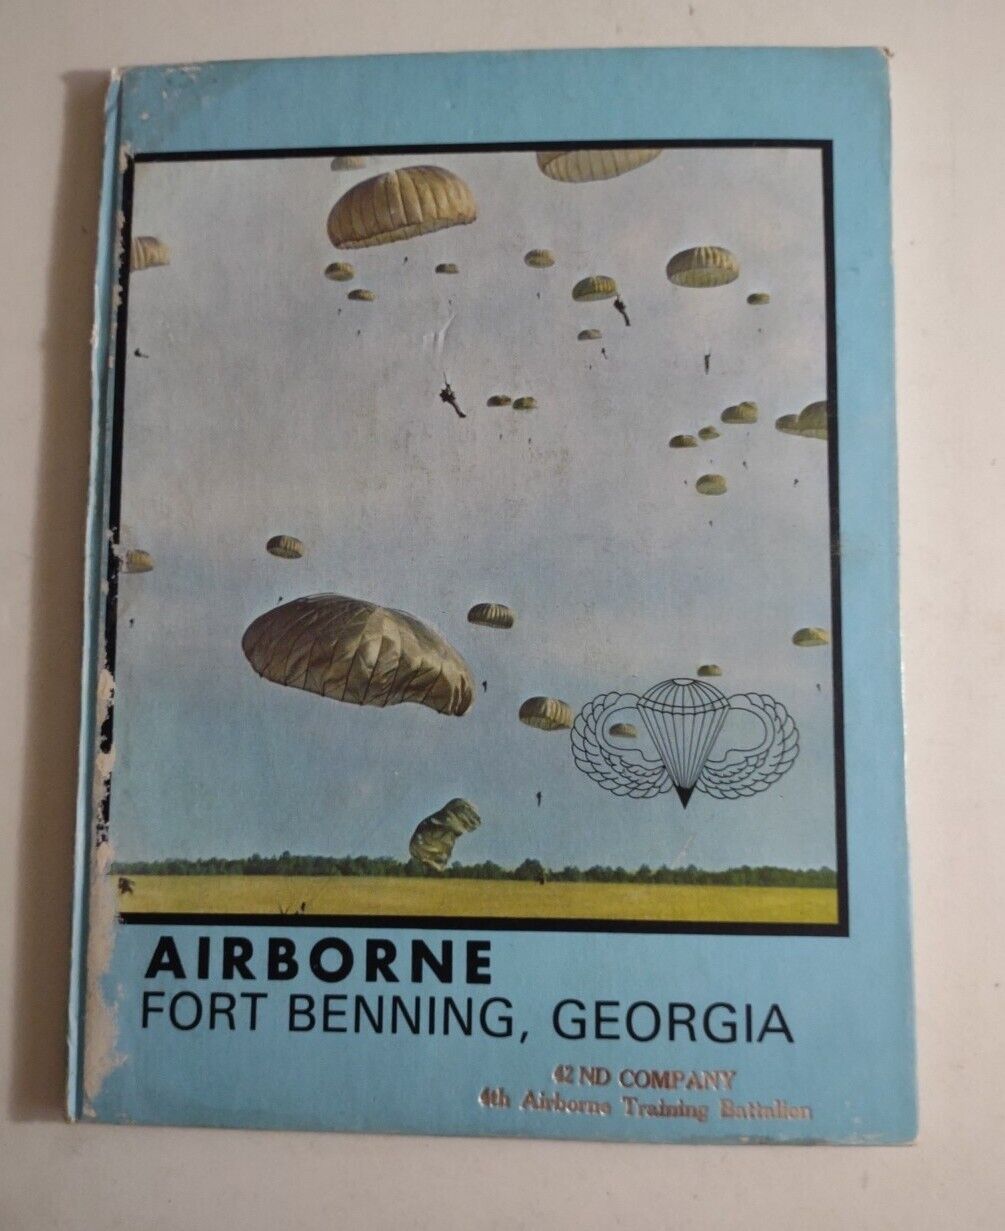 Fort Benning, Georgia 42nd company airborne ranger training yearbook.